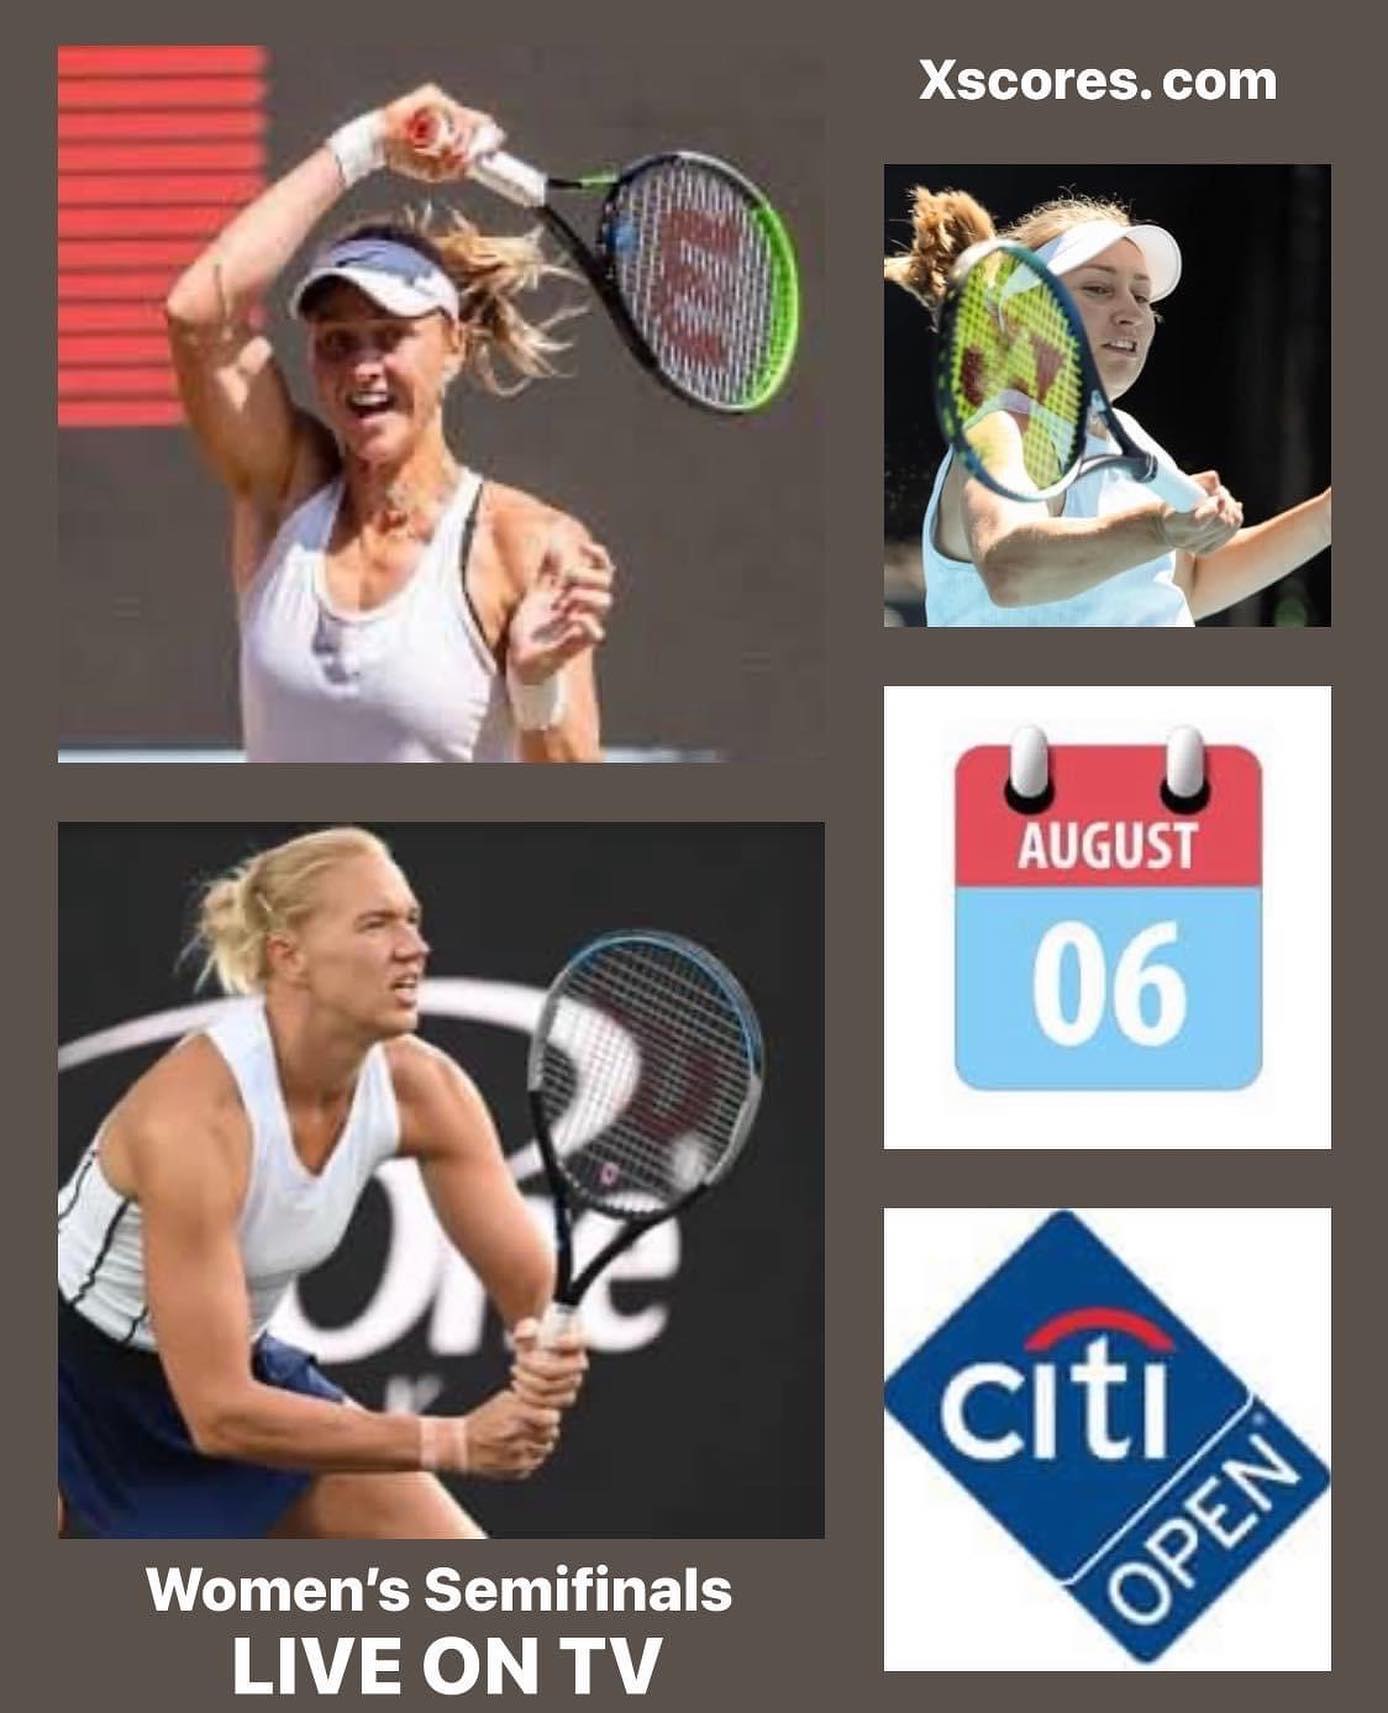 Tennis- WTA 250 - Surface Hard - Citi Open, Washington, DC, U.S.A. (August 01st - 07th 2022